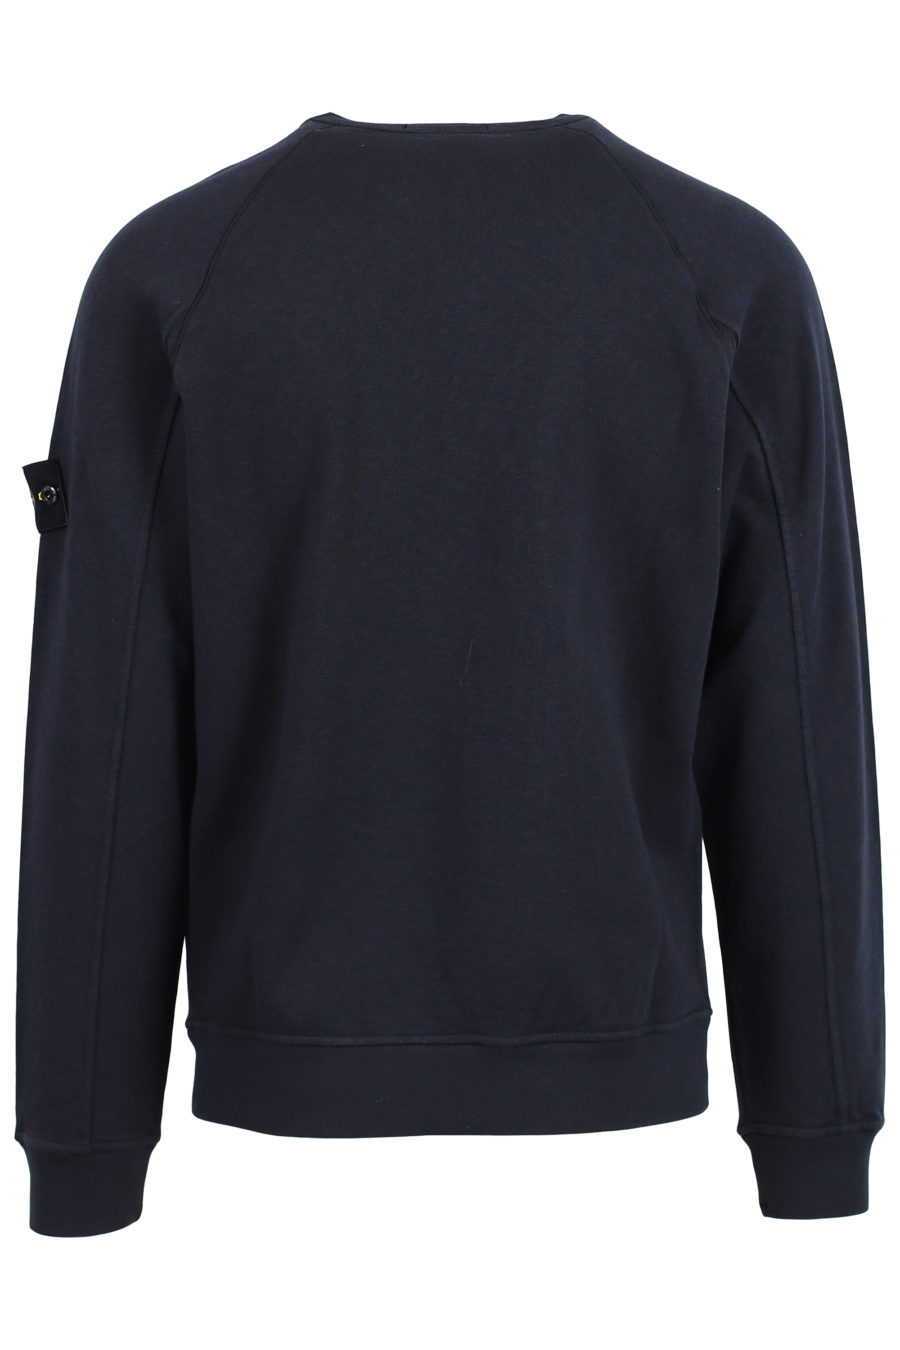 Marineblaues Sweatshirt mit Aufnäher - IMG 3649